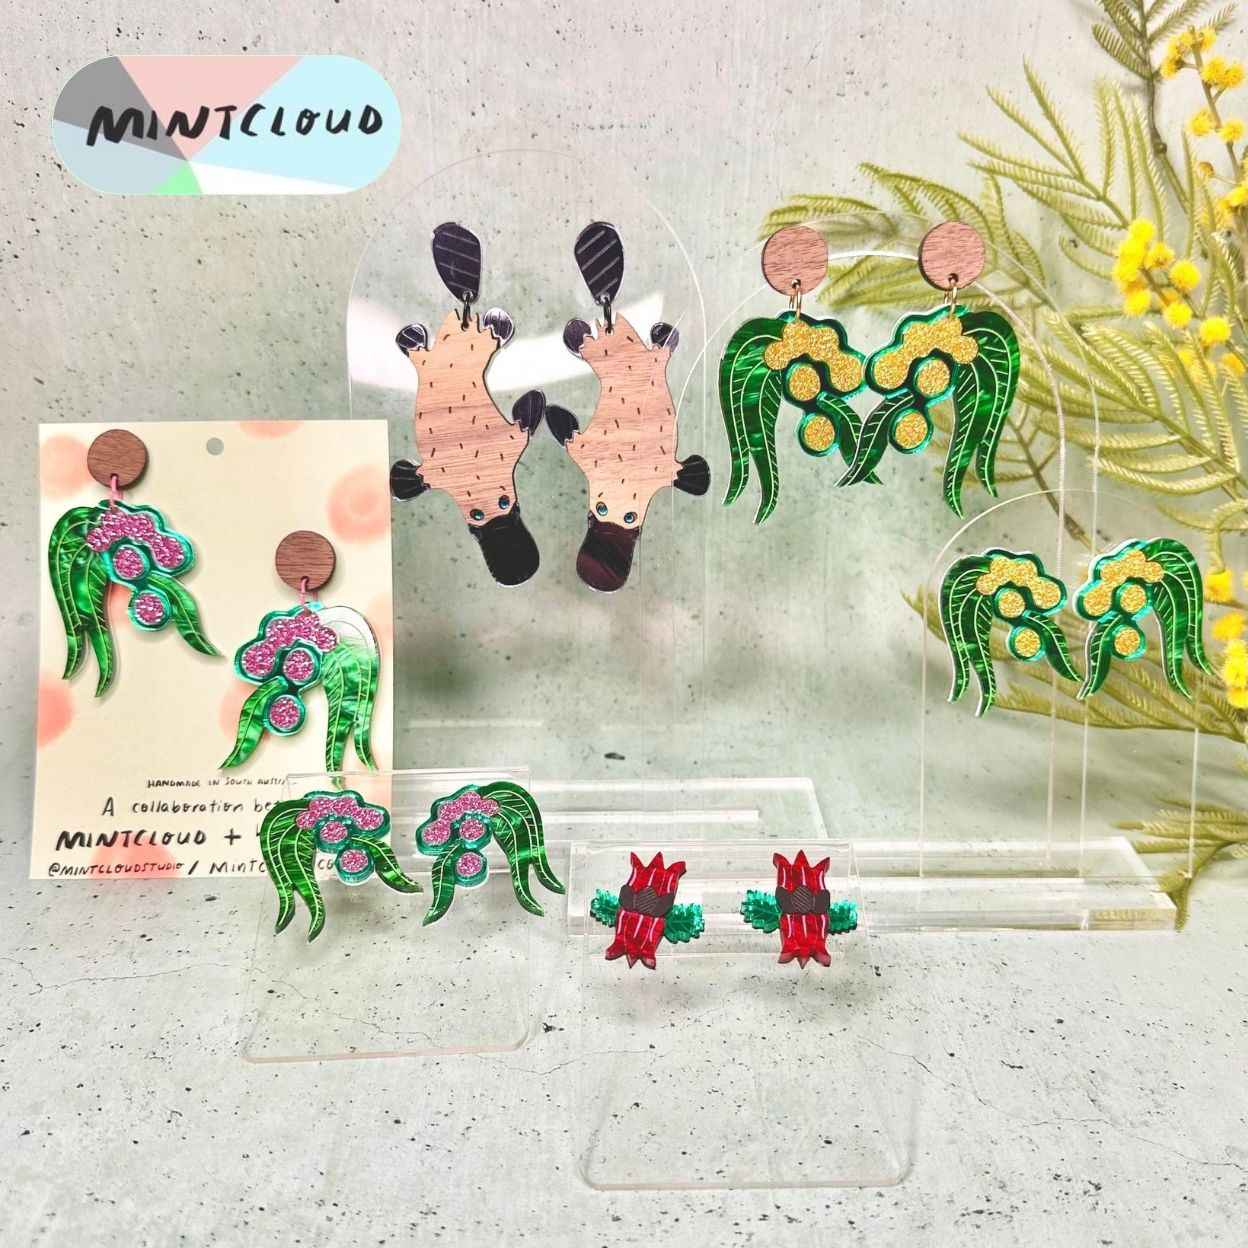 Mintcloud x Little Harlequin Studio Collaboration Earrings - Wattle Dangles Various